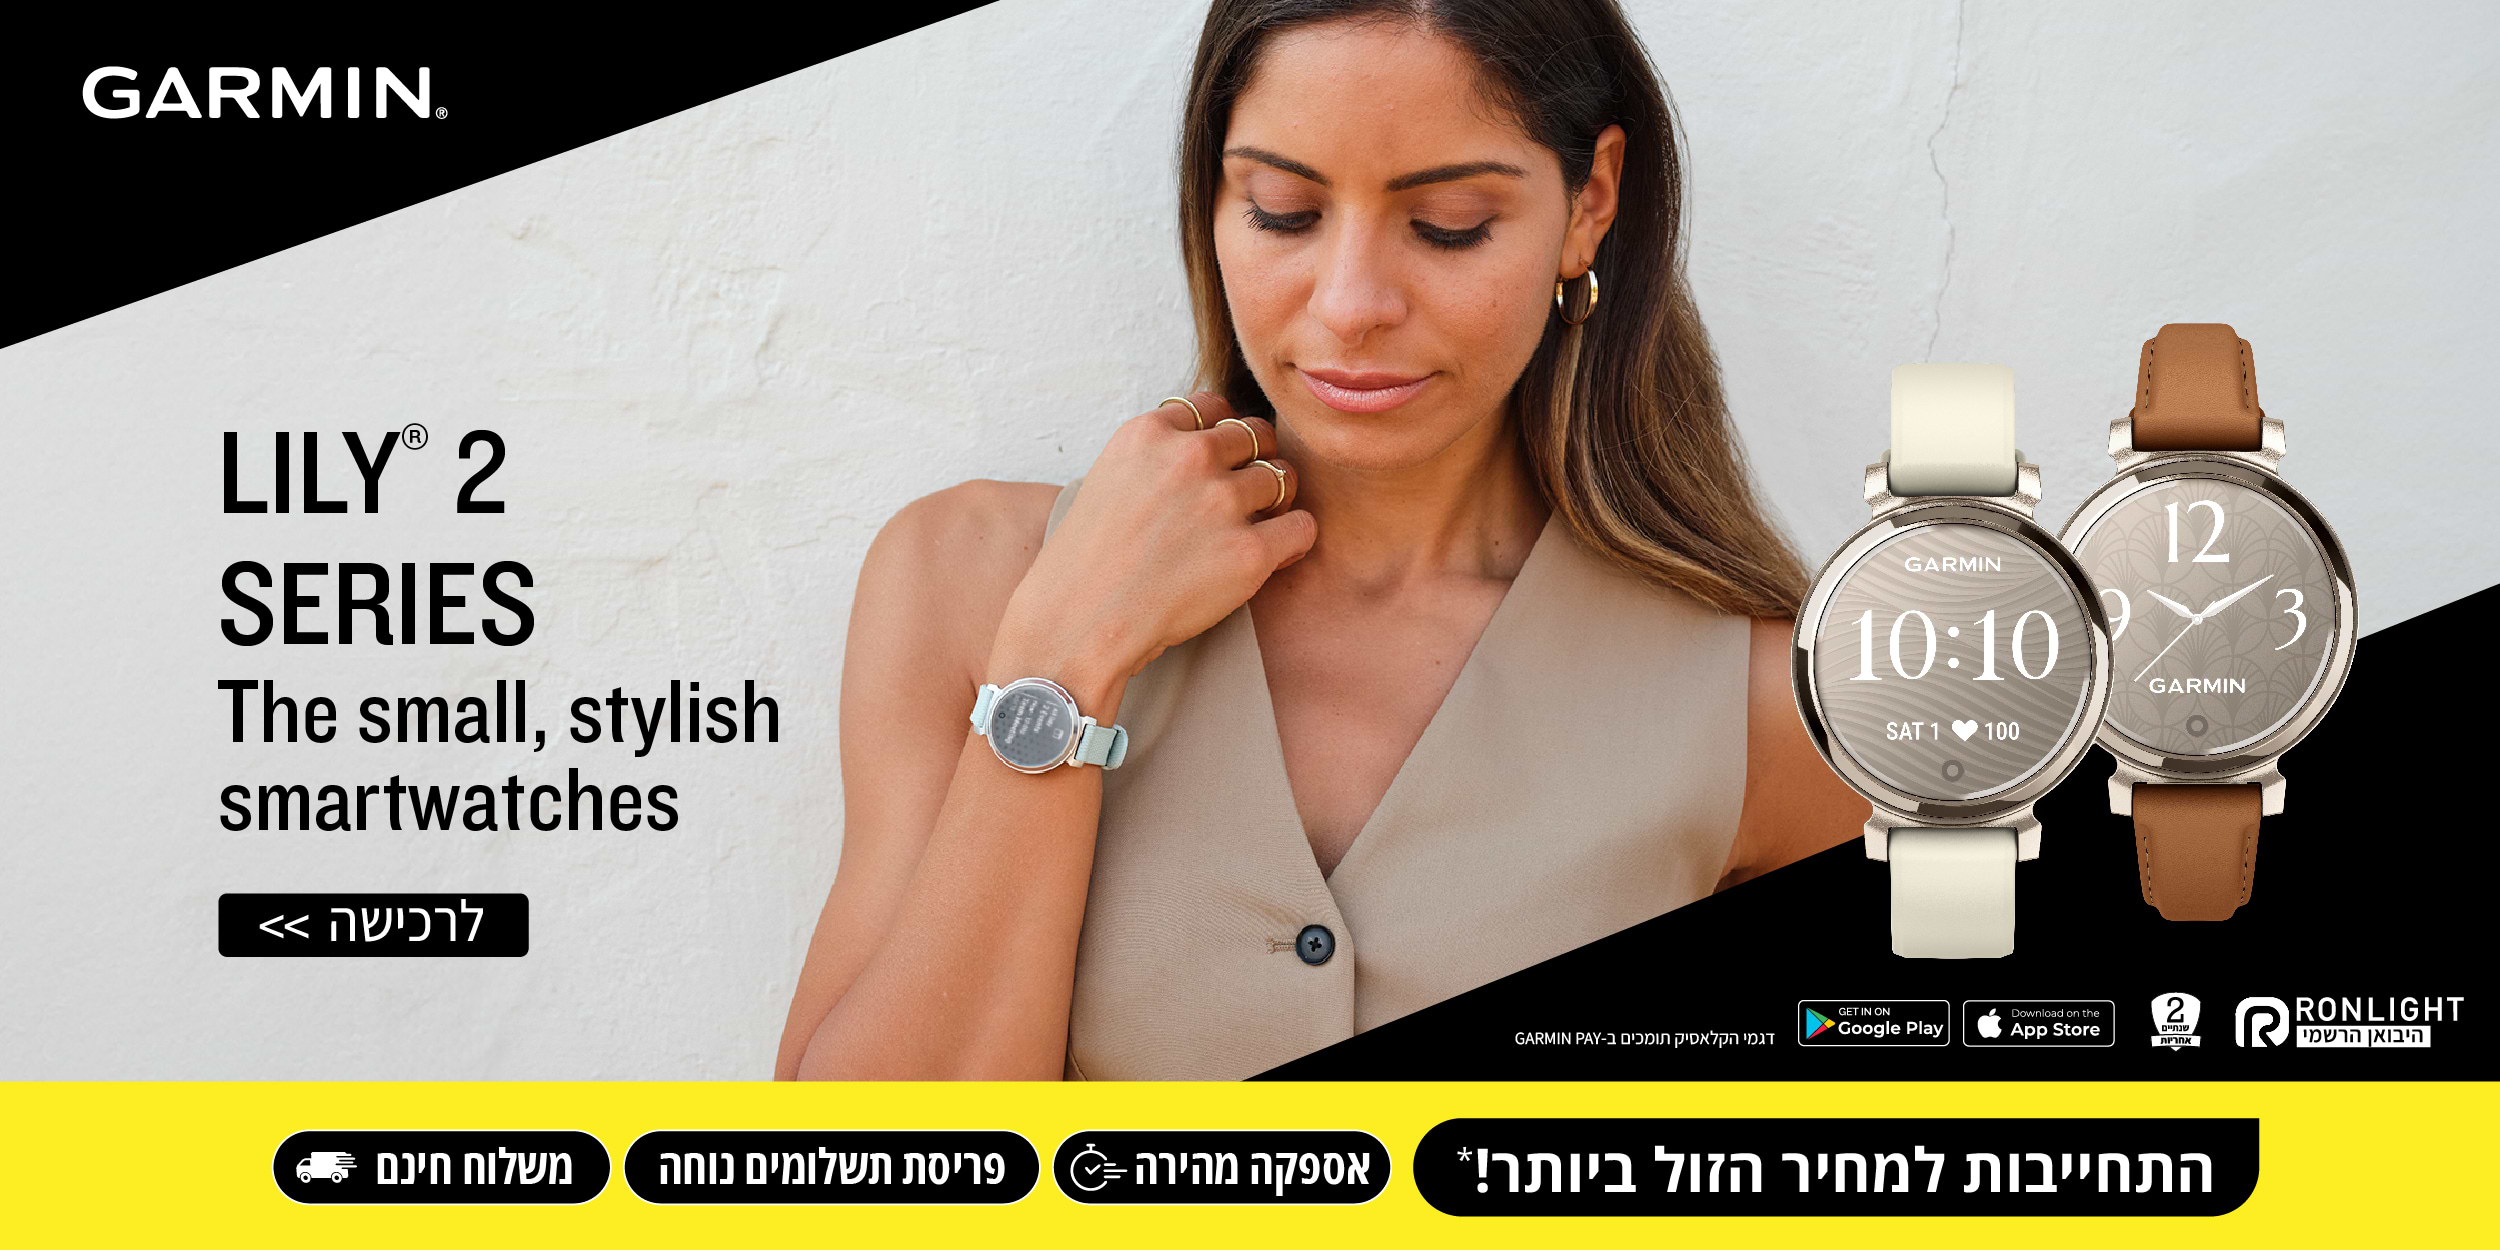 GARMIN LILY 2 SERIES The small, stylish smartwatches. דגמי הקלאסיק תומכים ב- GARMIN PAY. התחייבות למחיר הזול ביותר! אספקה מהירה, פריסת תשלומים נוחה ומשלוח חינם.